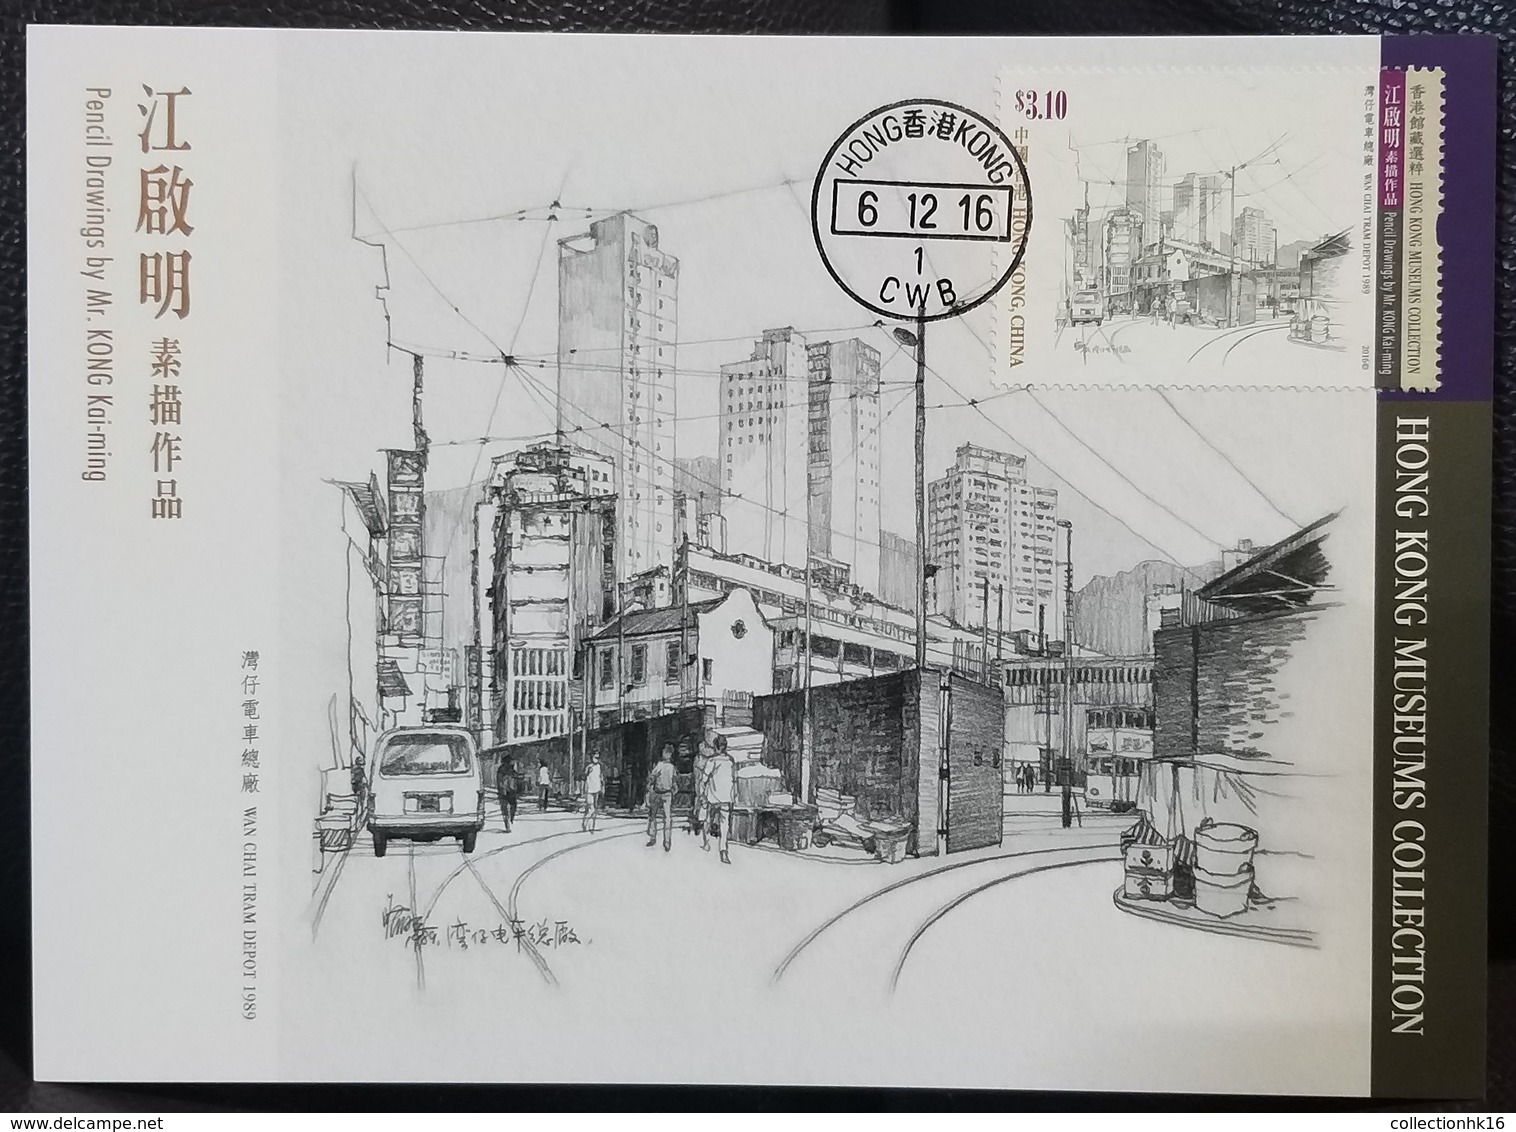 Museums Collection - Pencil Drawings Old Building Streets 2016 Hong Kong MaxSimum card MC Set (Location Postmark)